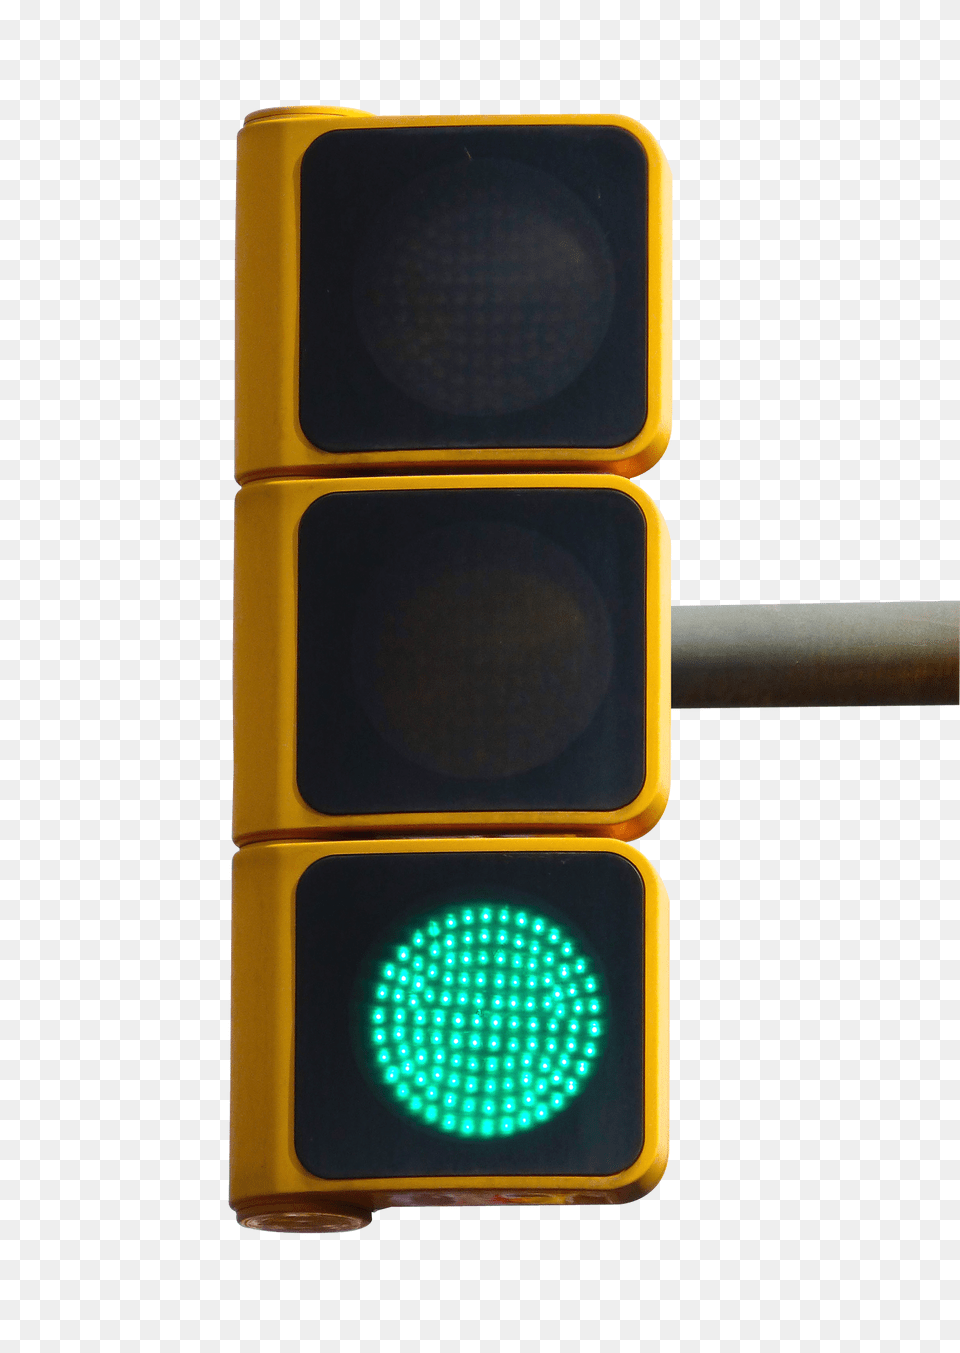 Pngpix Com Traffic Light Image, Traffic Light Free Png Download